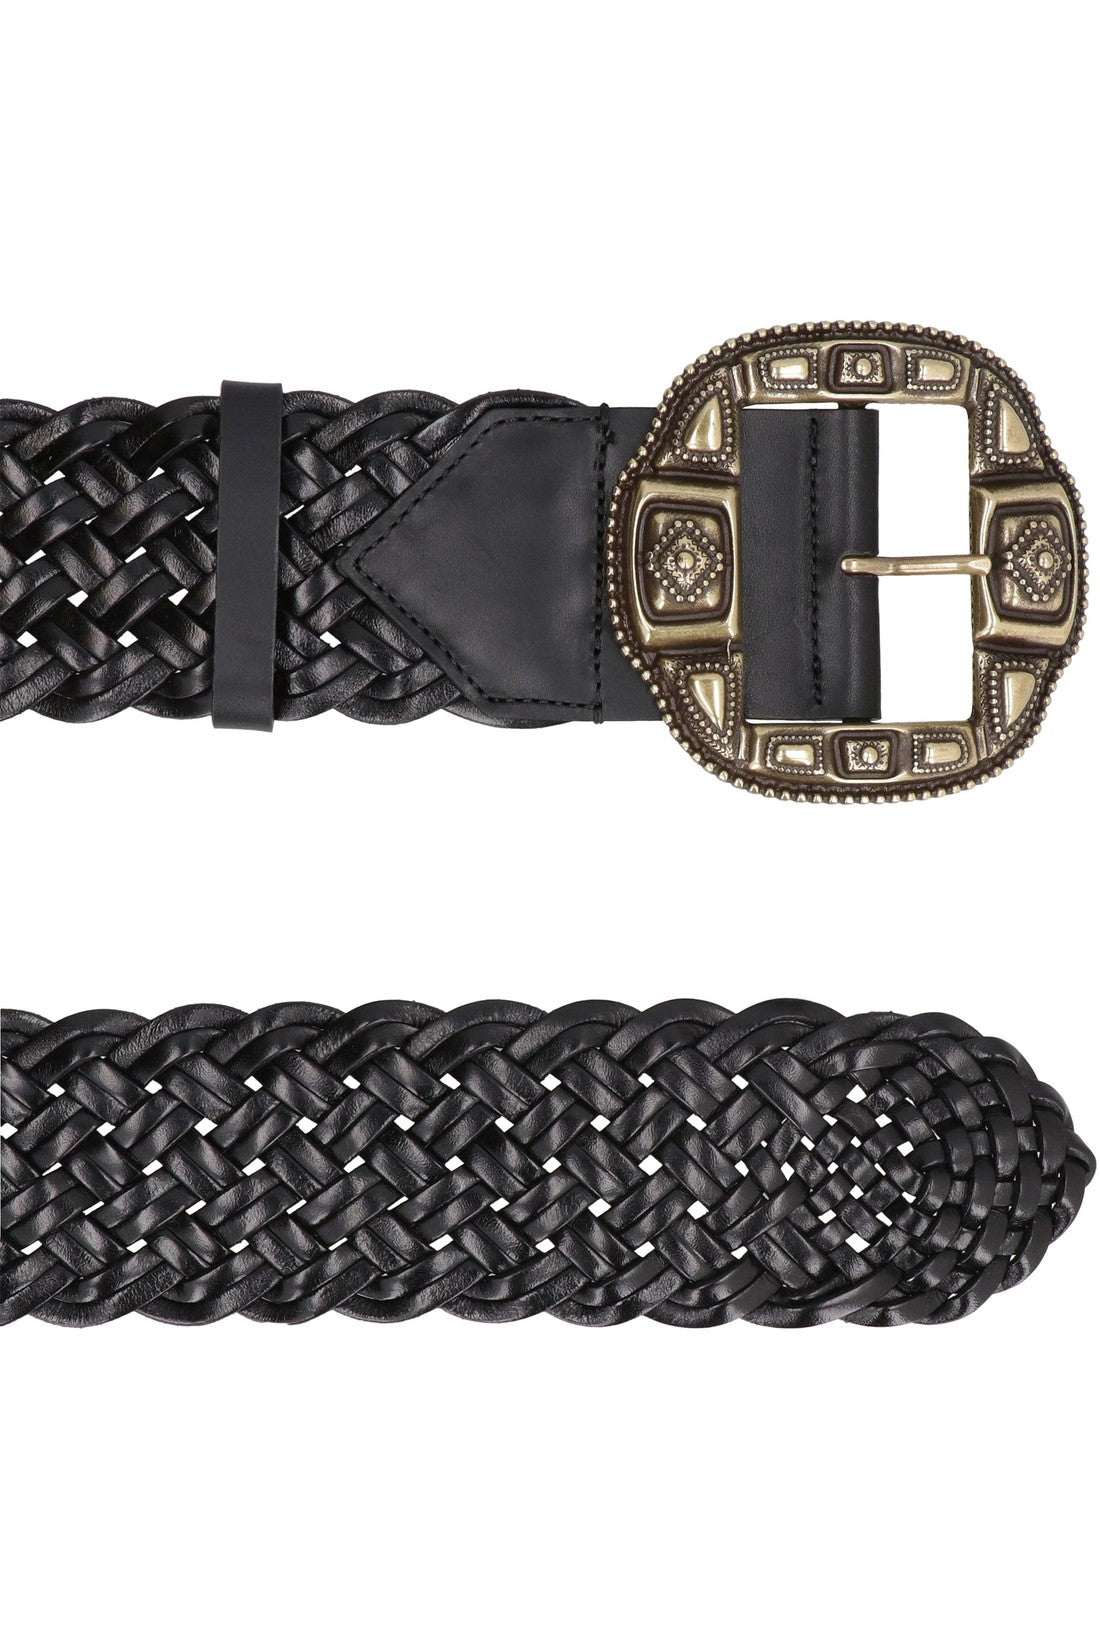 Etro-OUTLET-SALE-Leather braided belt-ARCHIVIST